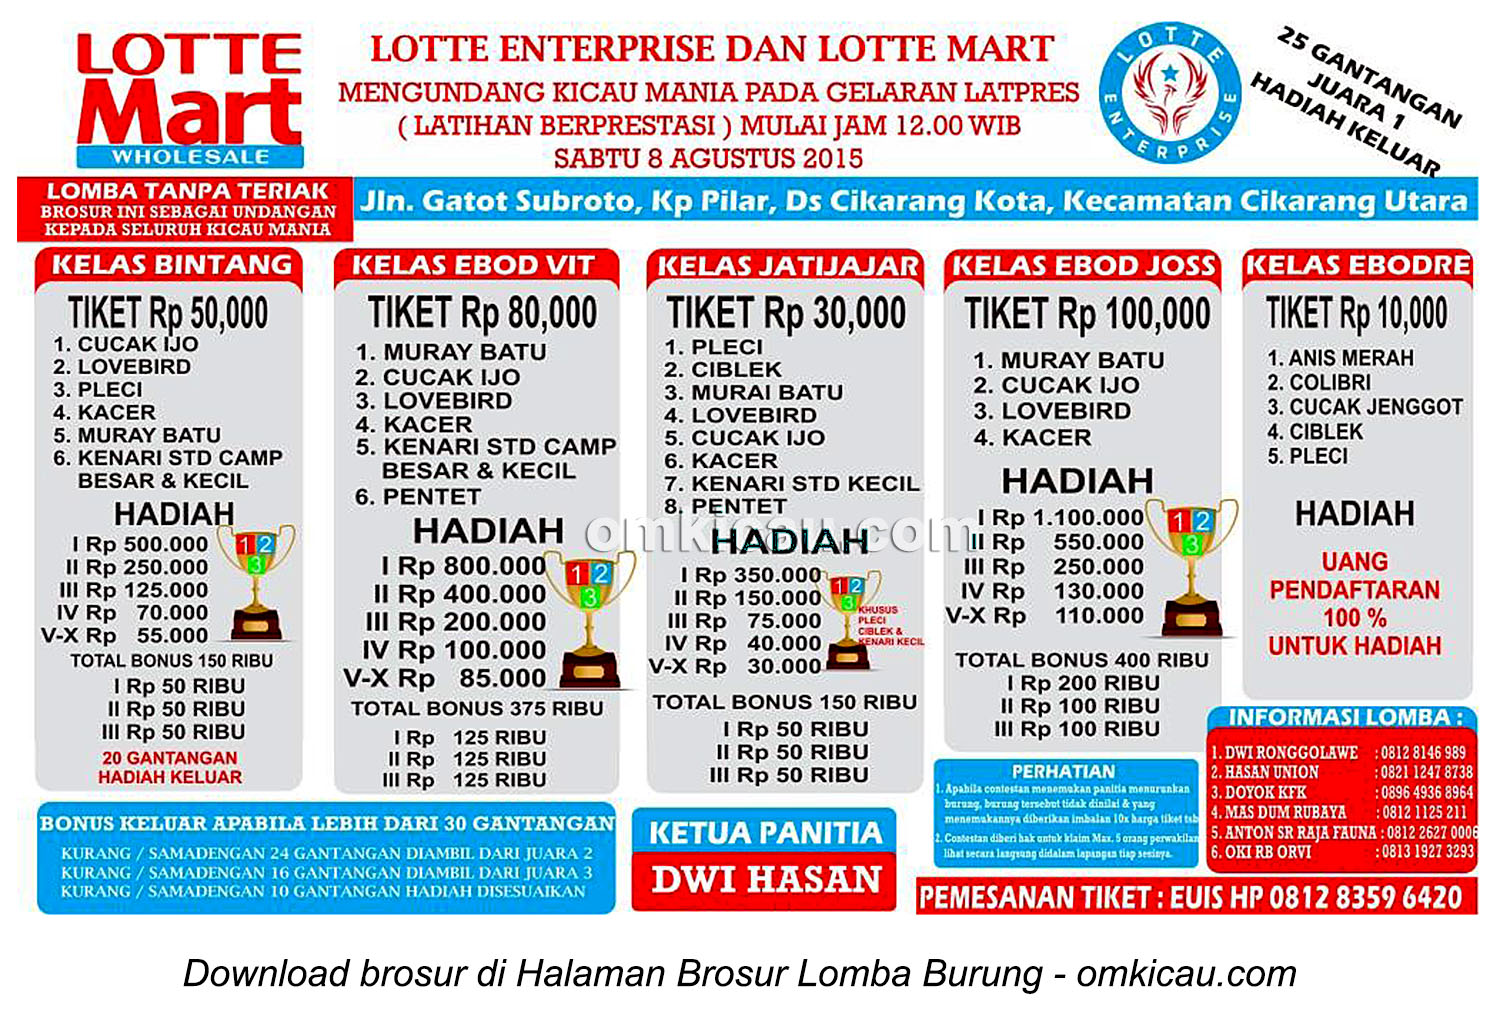 Brosur Latpres Lotte Enterprise, Cikarang, 8 Agustus 2015